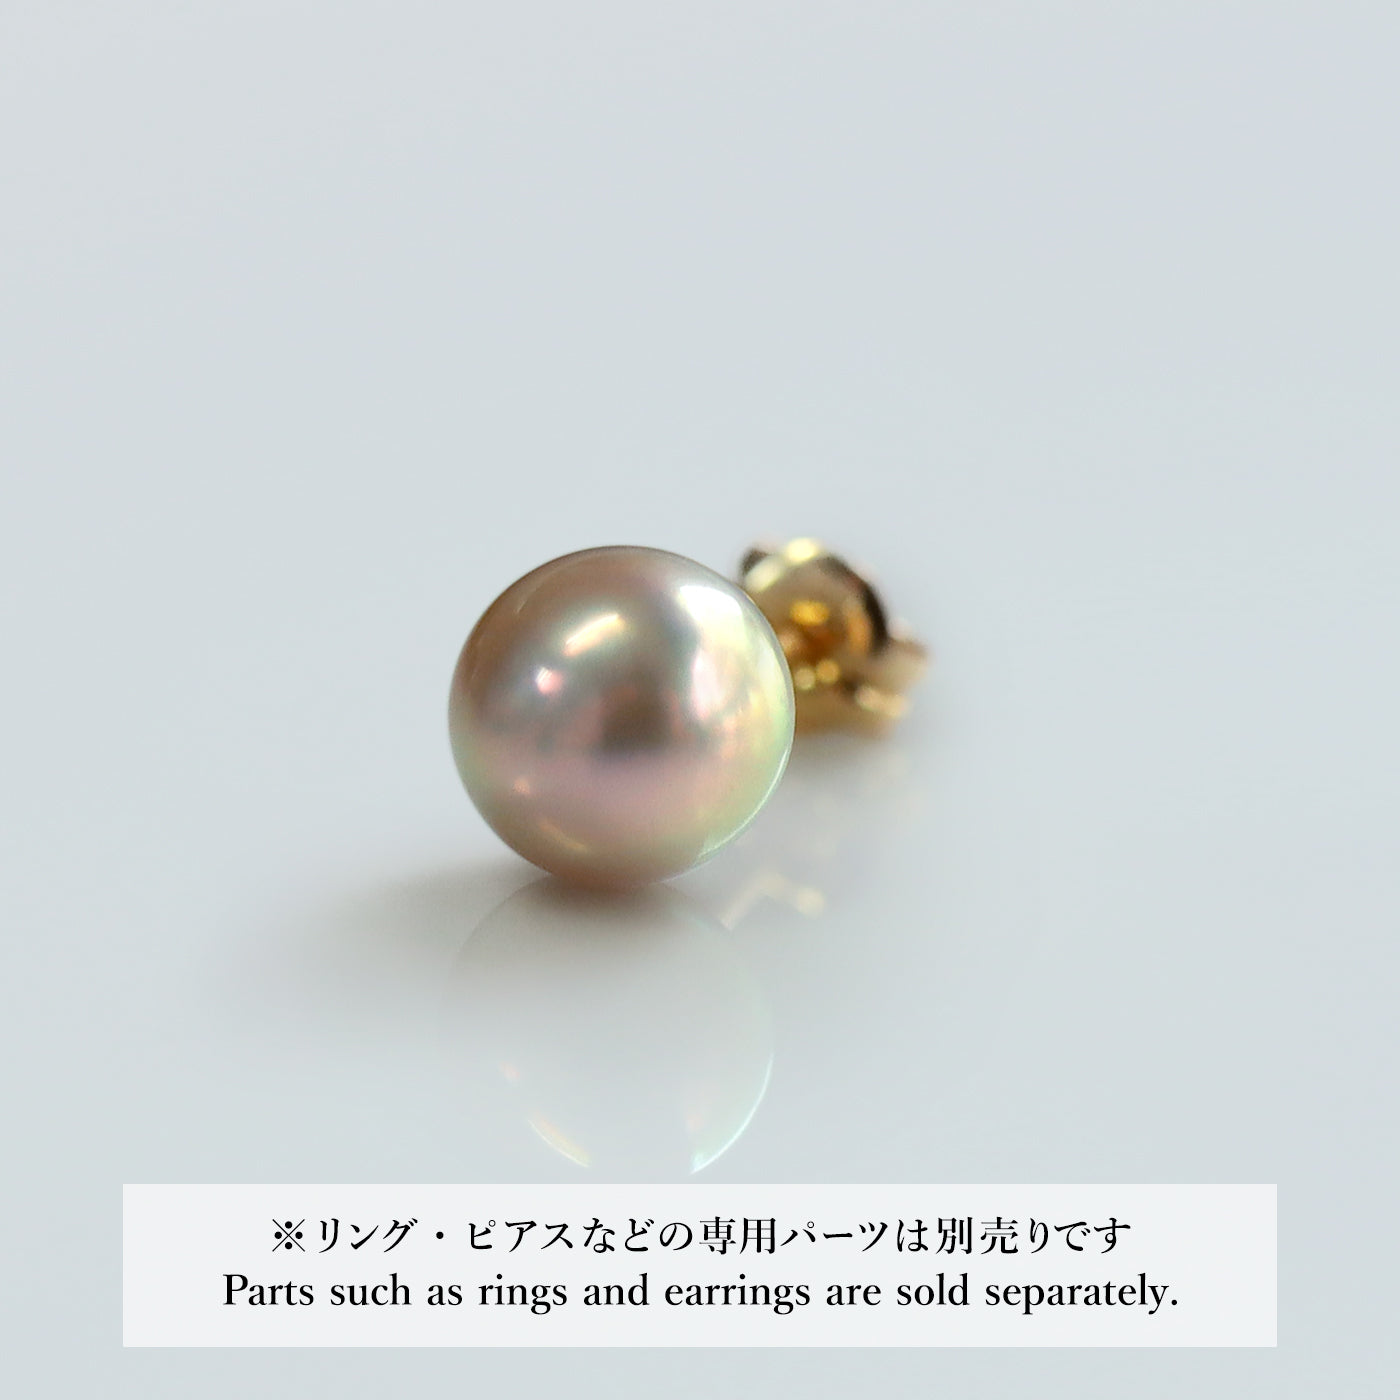 【COLLECTIBLE】Golden South Sea Keshi Pearl  (No. CT66114)